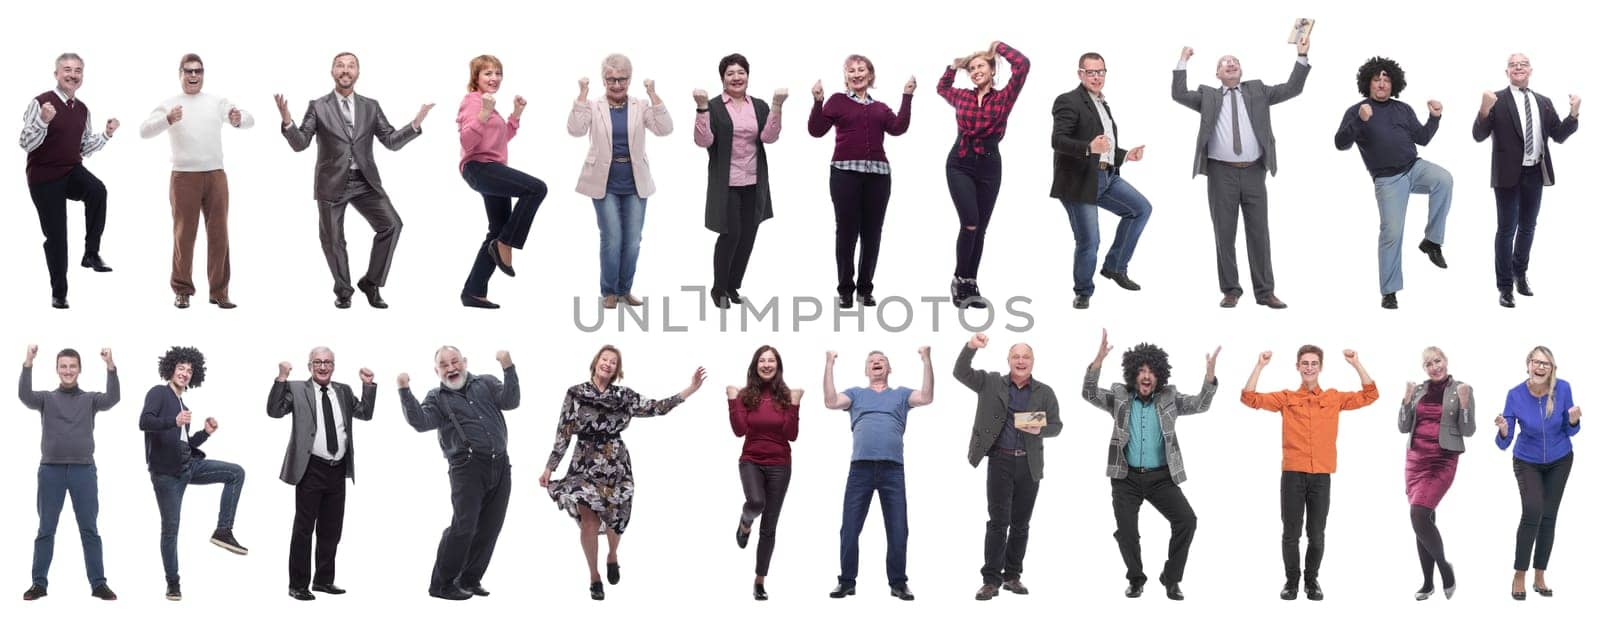 collage of people joyful energetic full length isolated on white background